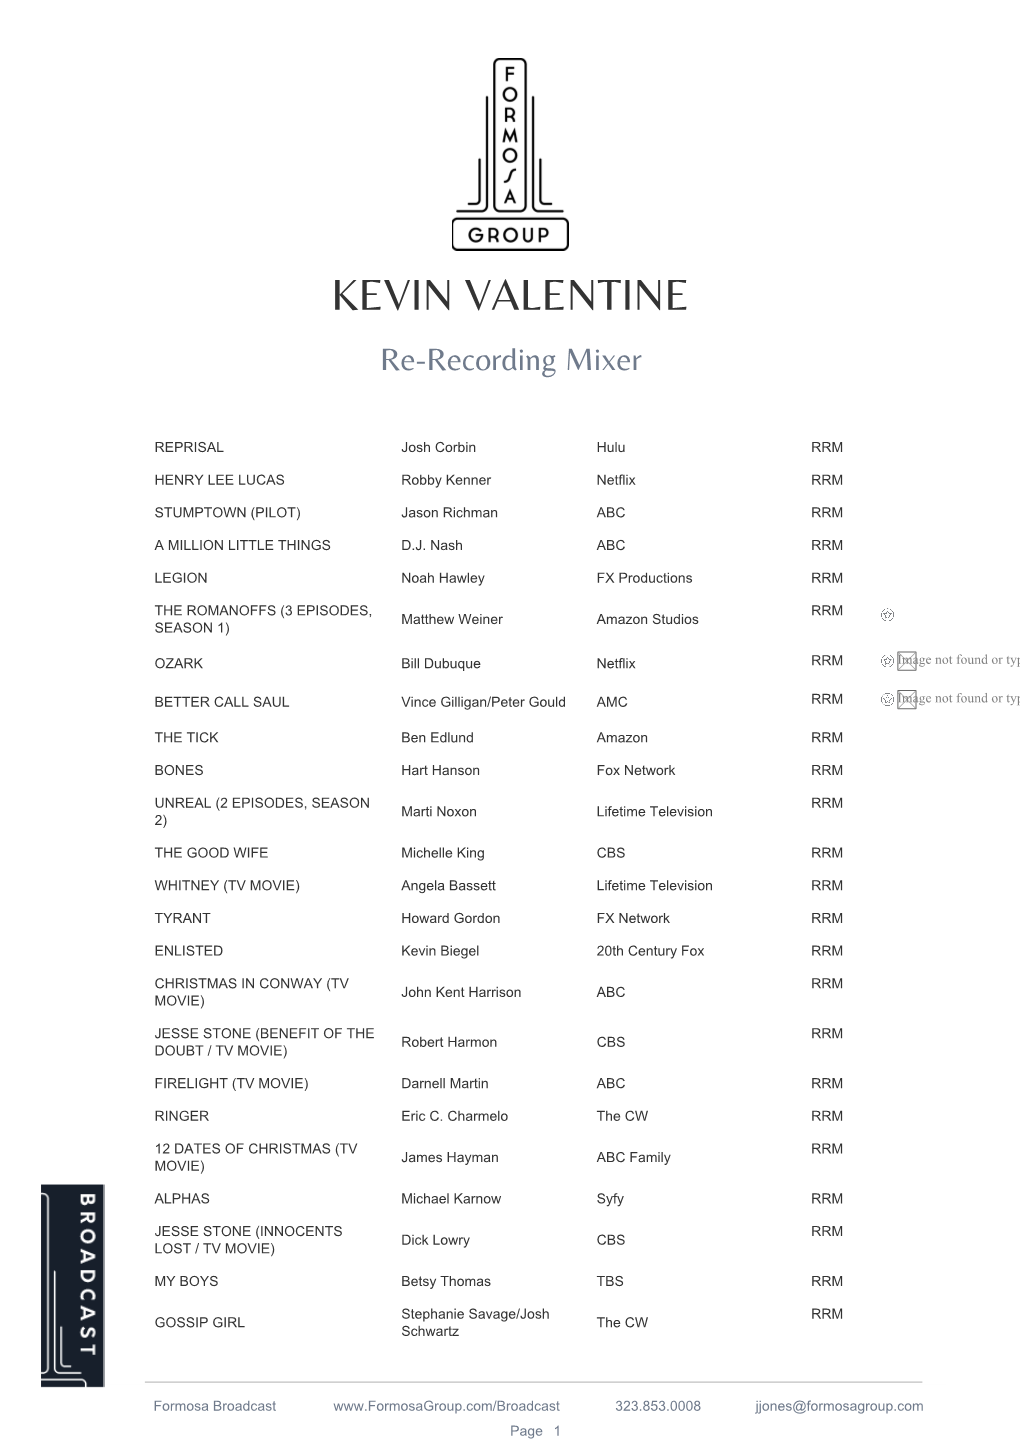 KEVIN VALENTINE Re-Recording Mixer